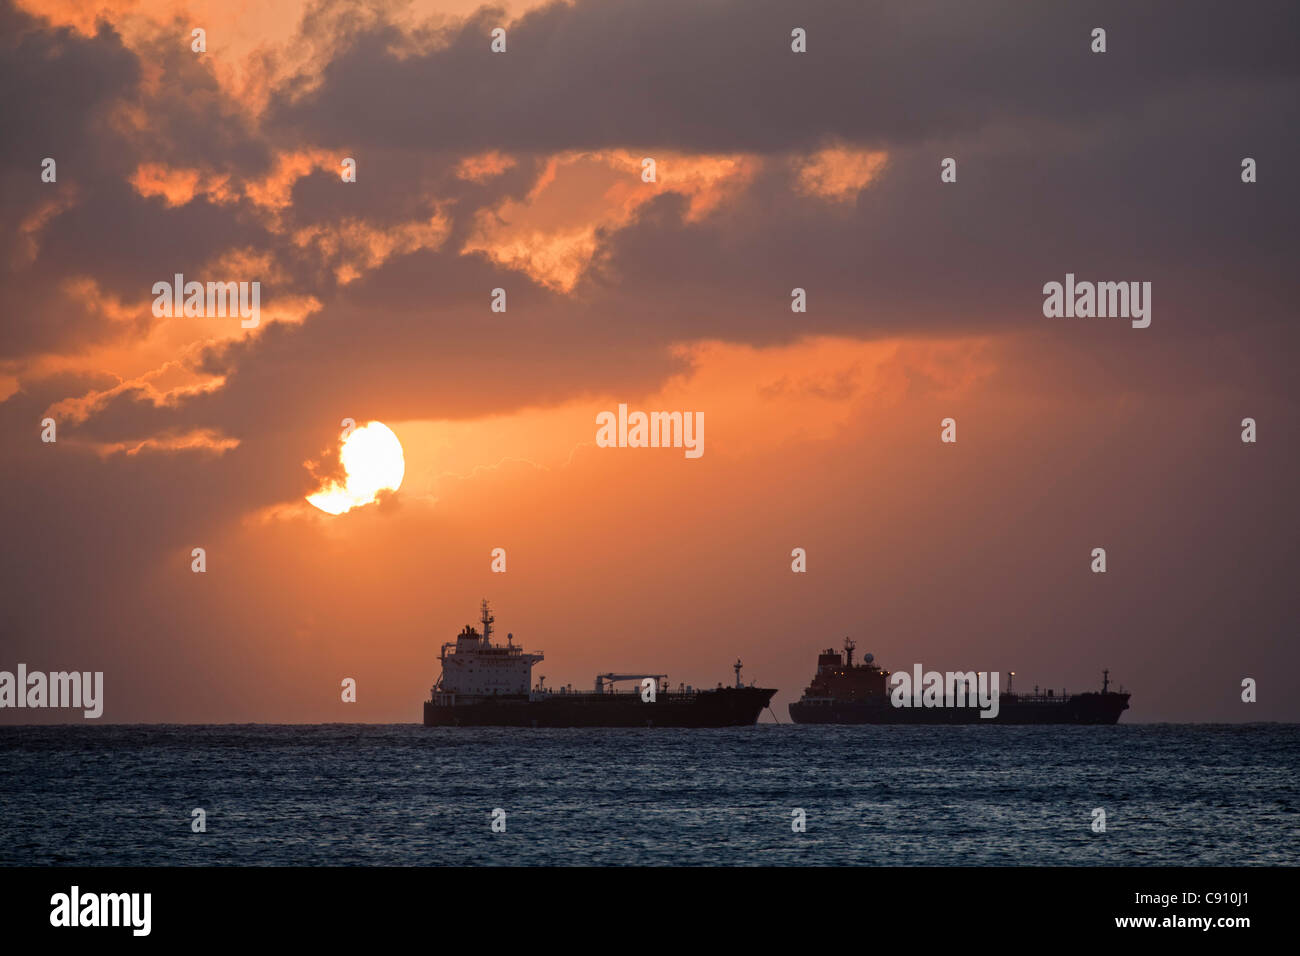 The Netherlands, Oranjestad, Sint Eustatius Island, Dutch Caribbean. Oil tankers. Sunset. Stock Photo